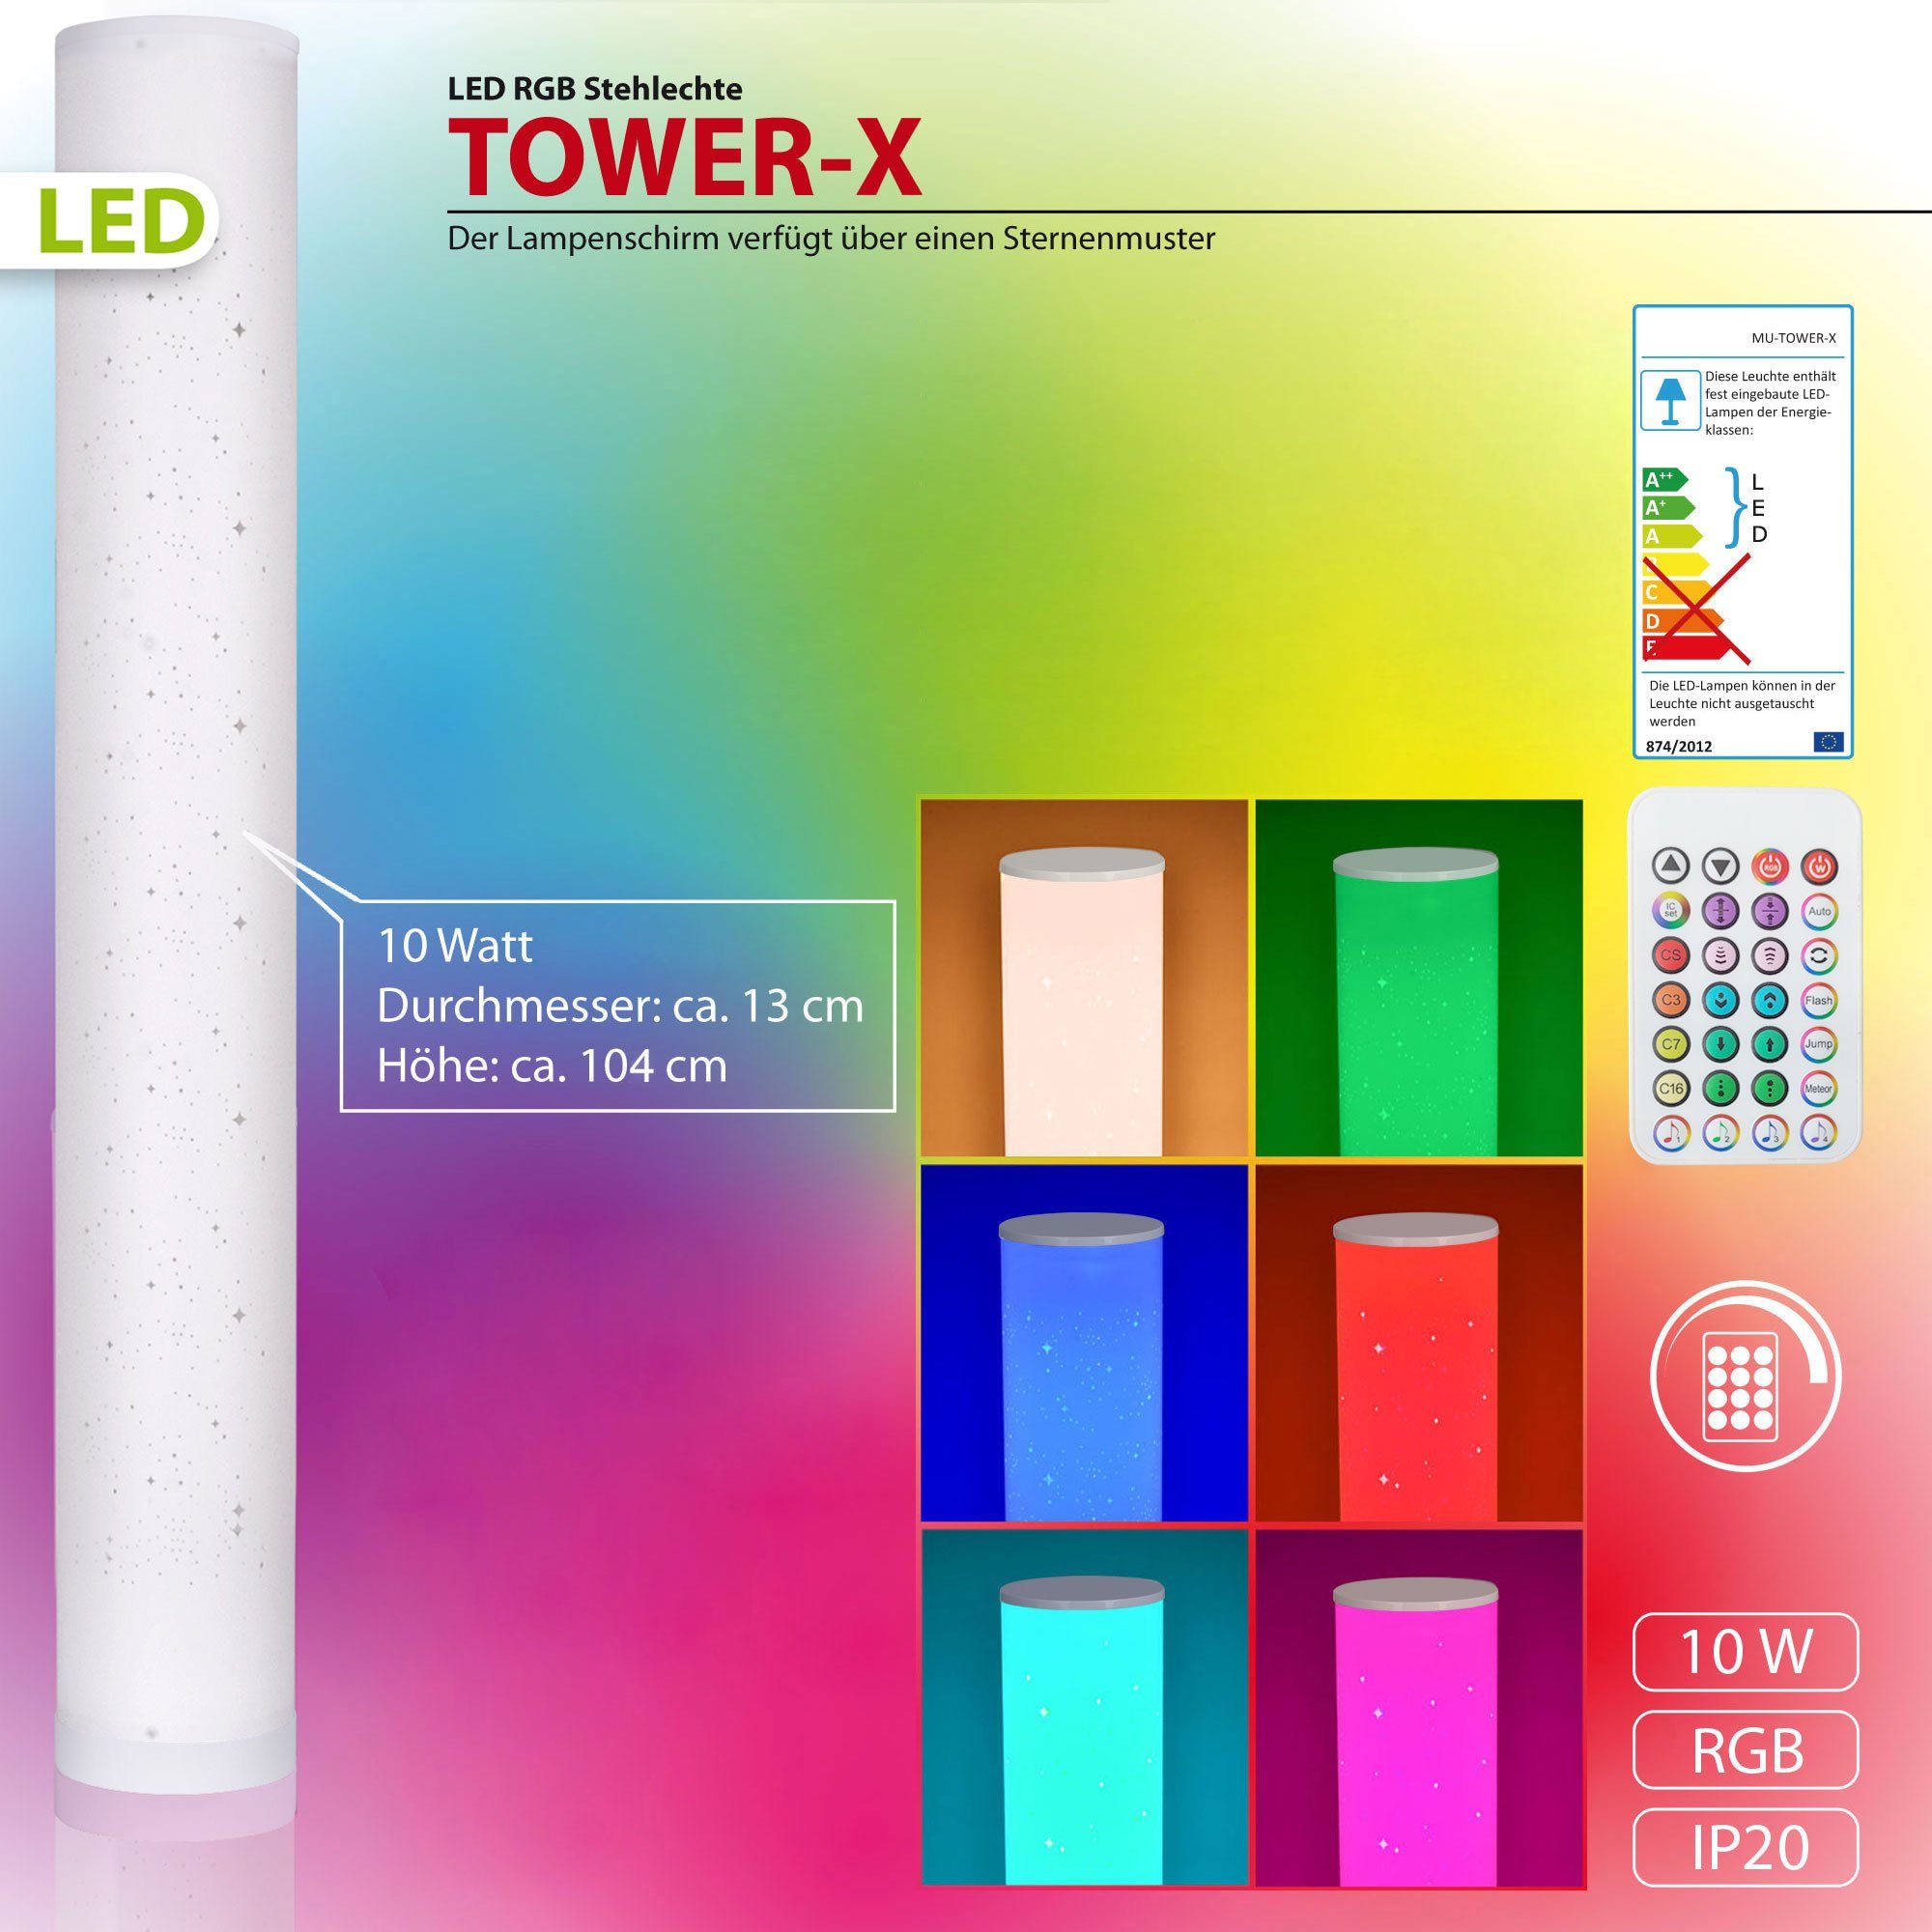 Dimmbar, Corner, LED integriert, RGB, LED Tower-X, Maxkomfort fest Stehlampe LED, Eckleuchte, Farbig, Stehleuchte, DIY, Sync, Lichtsäule, Music Farbwechsler, RGB, Fernbedienung Farbwechsel,